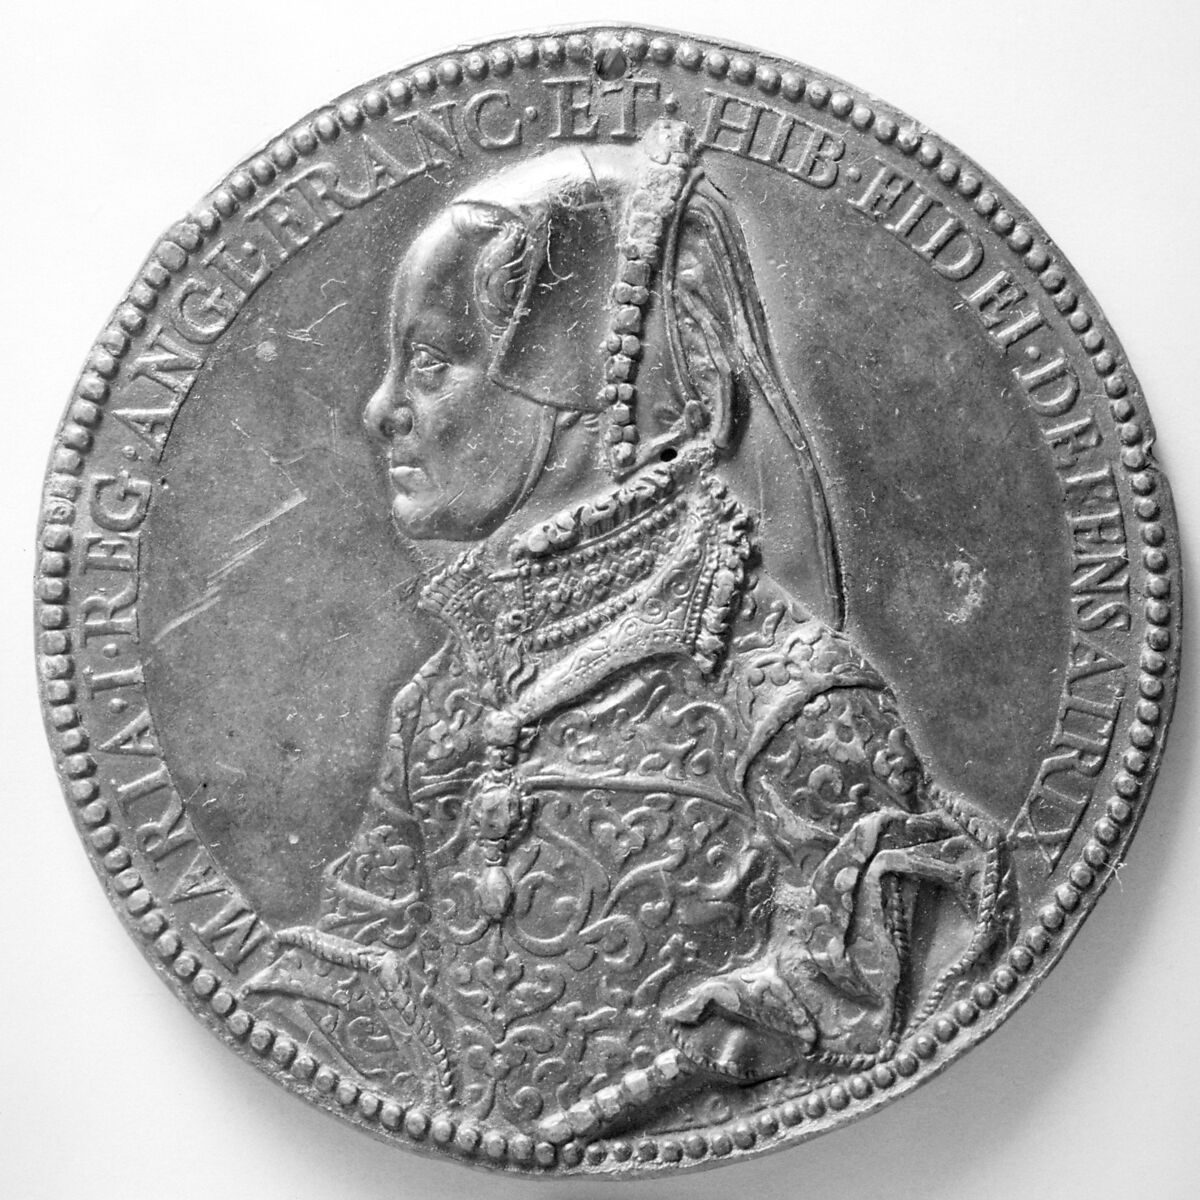 Mary Tudor, Queen of England, Medalist: Jacopo Nizolla da Trezzo (Italian, Milan 1515/19–1589 Madrid), Lead, cast, Italian 